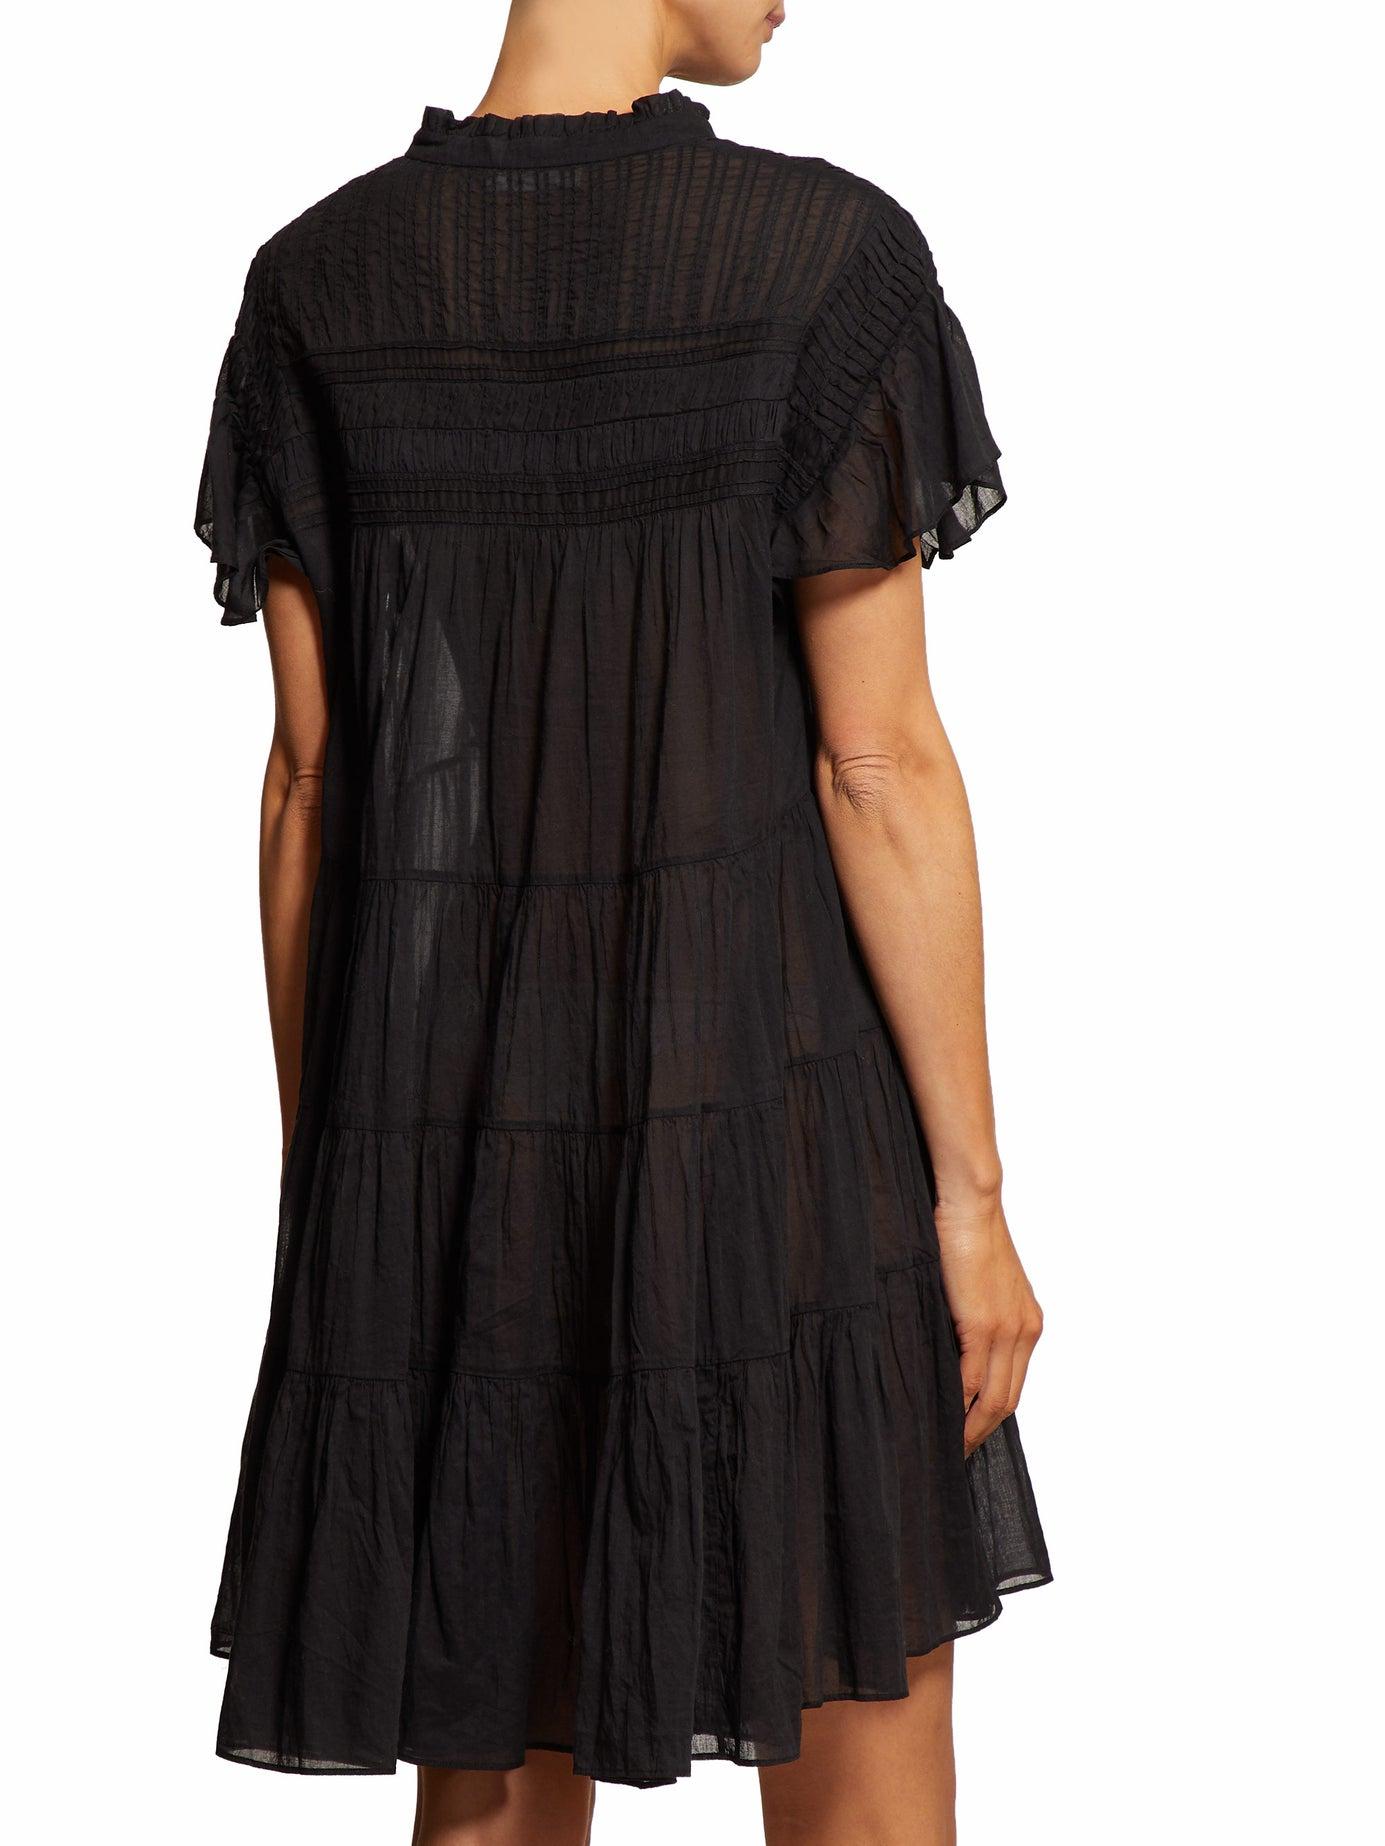 Isabel Lanikaye Cotton-voile Dress in Black - Lyst